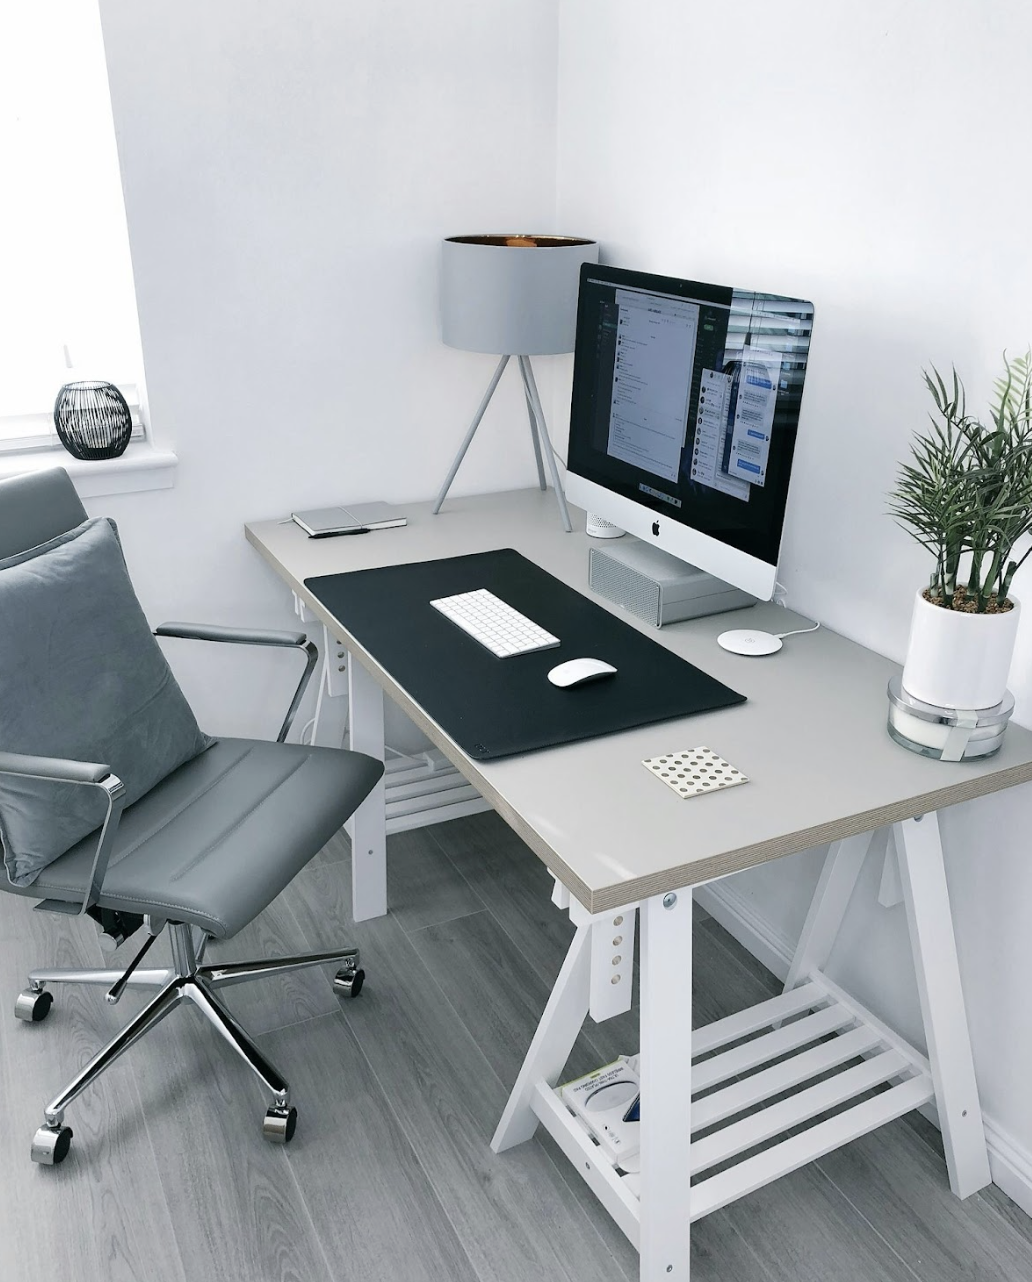 The Ultimate Remote Developer Home Office Setup